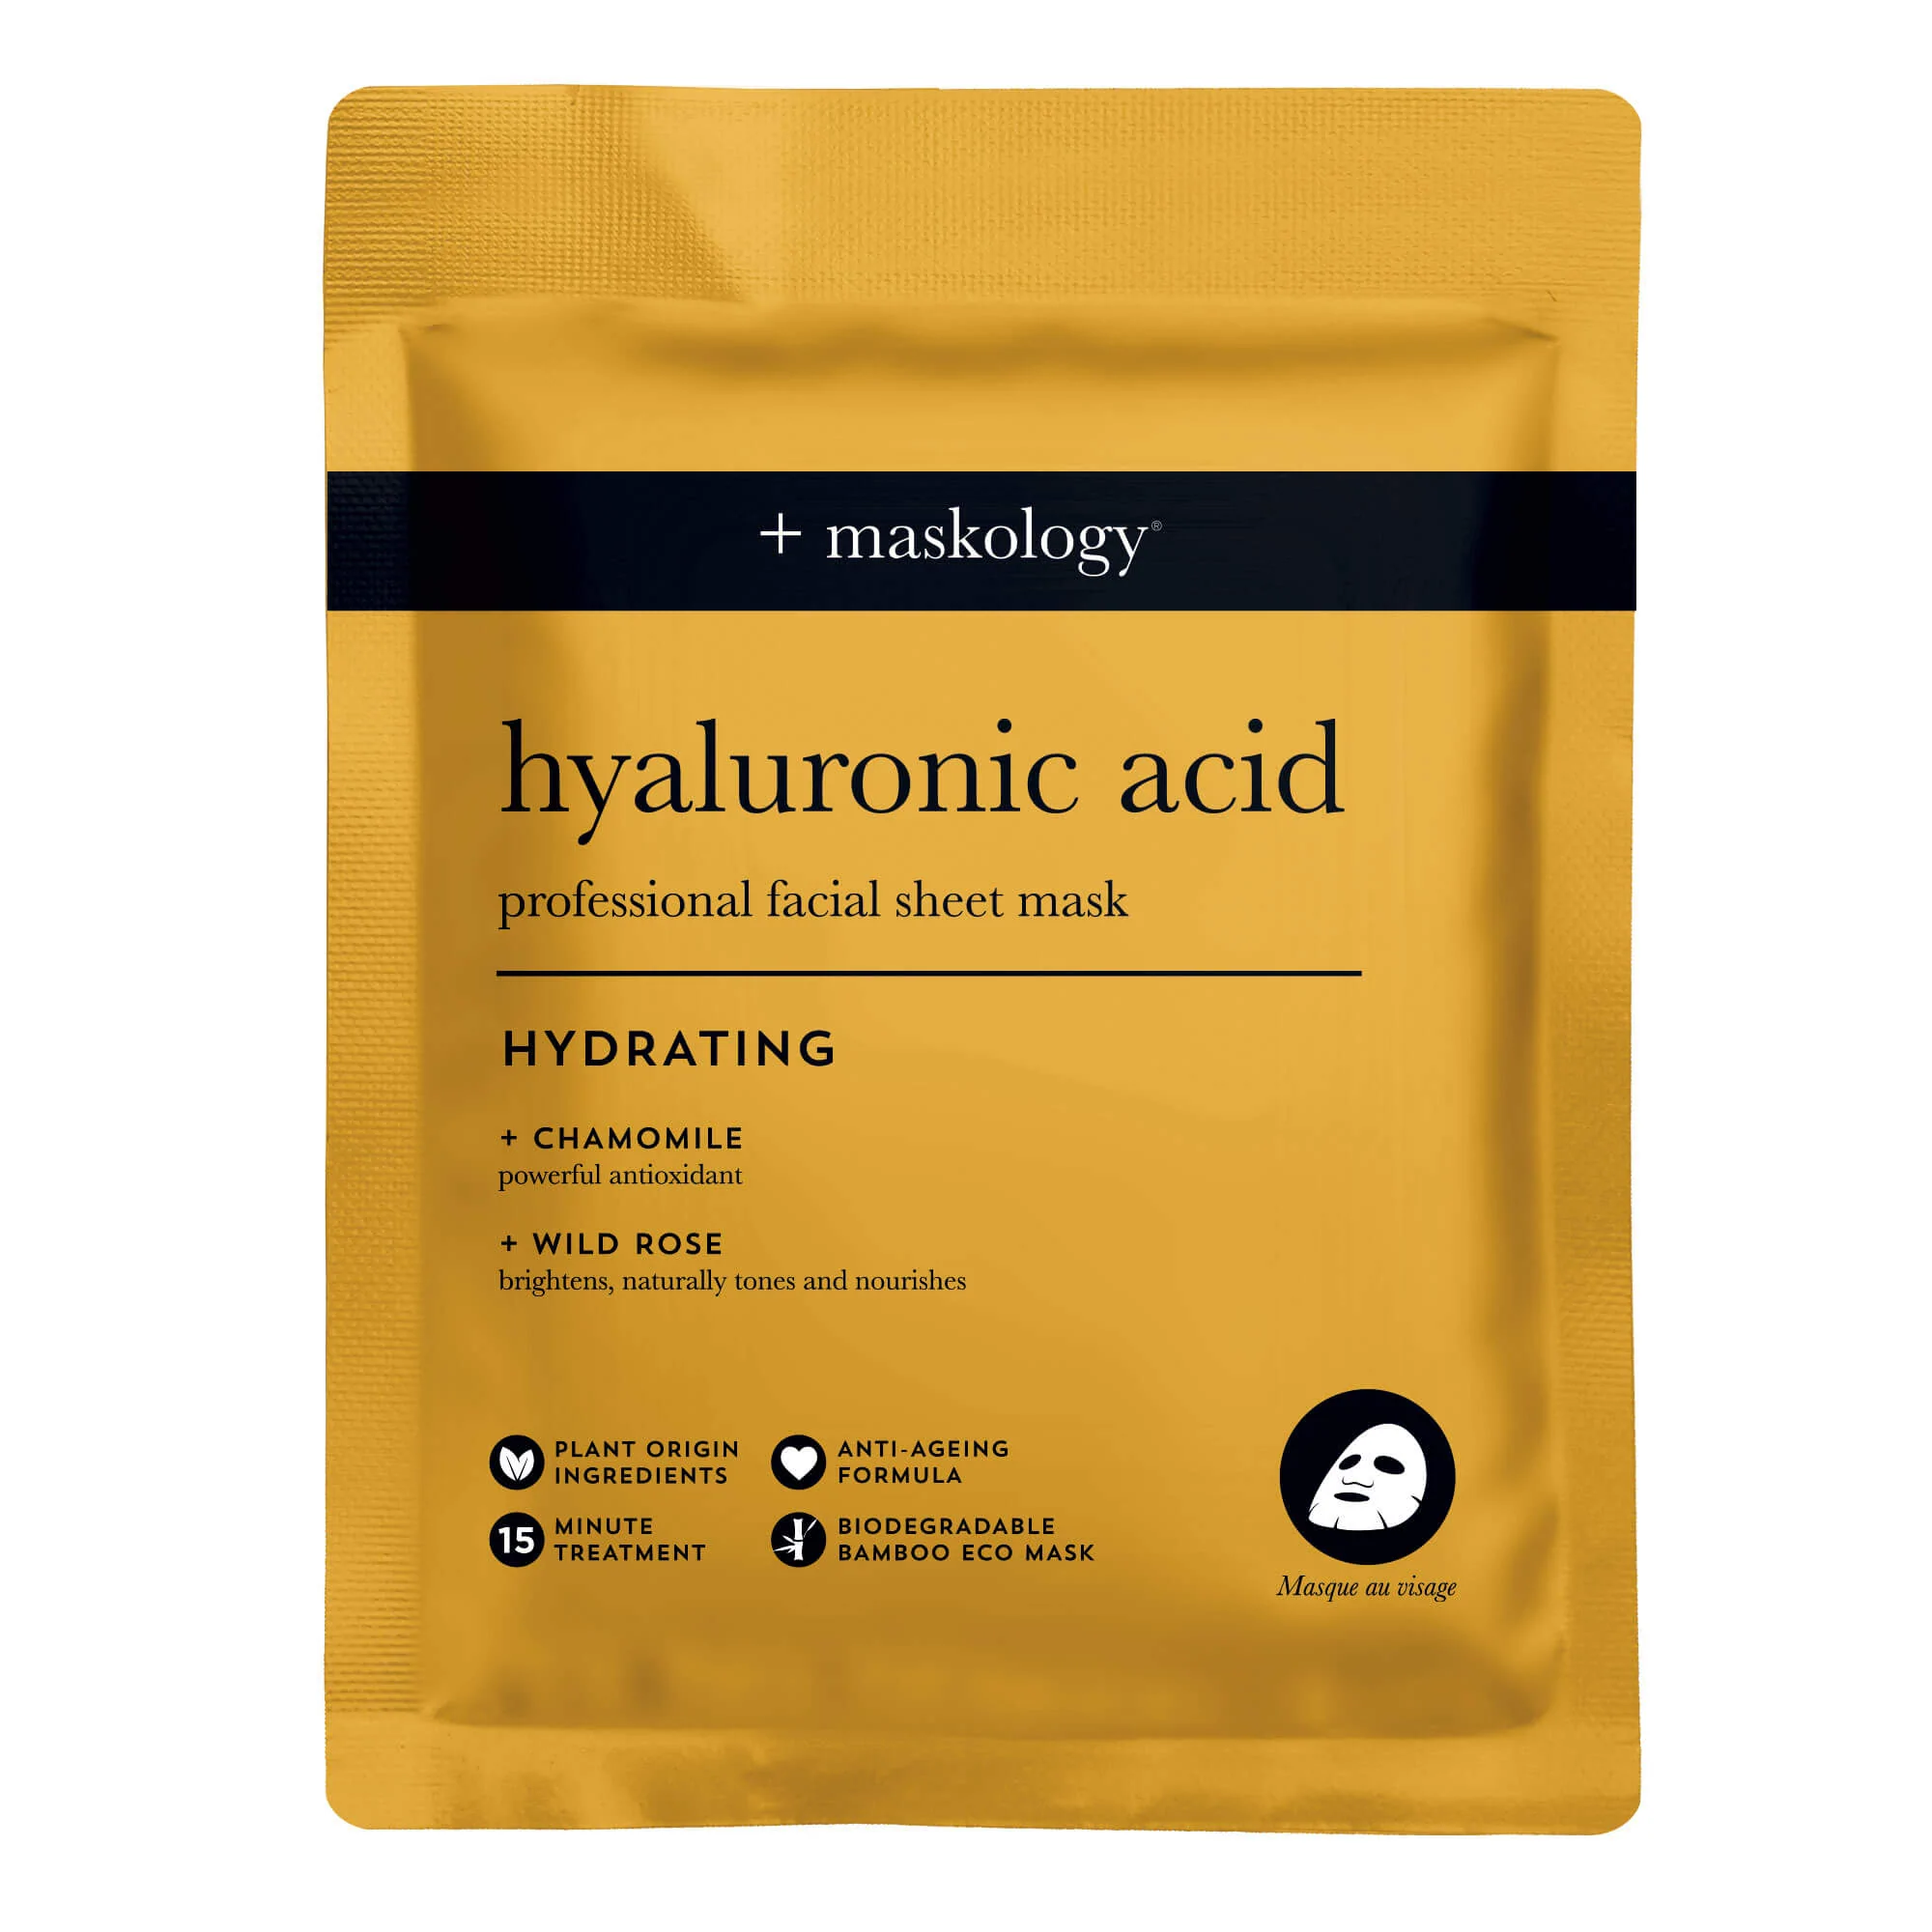 Maskology Hyaluronic Acid – Professional Facial Sheet Mask